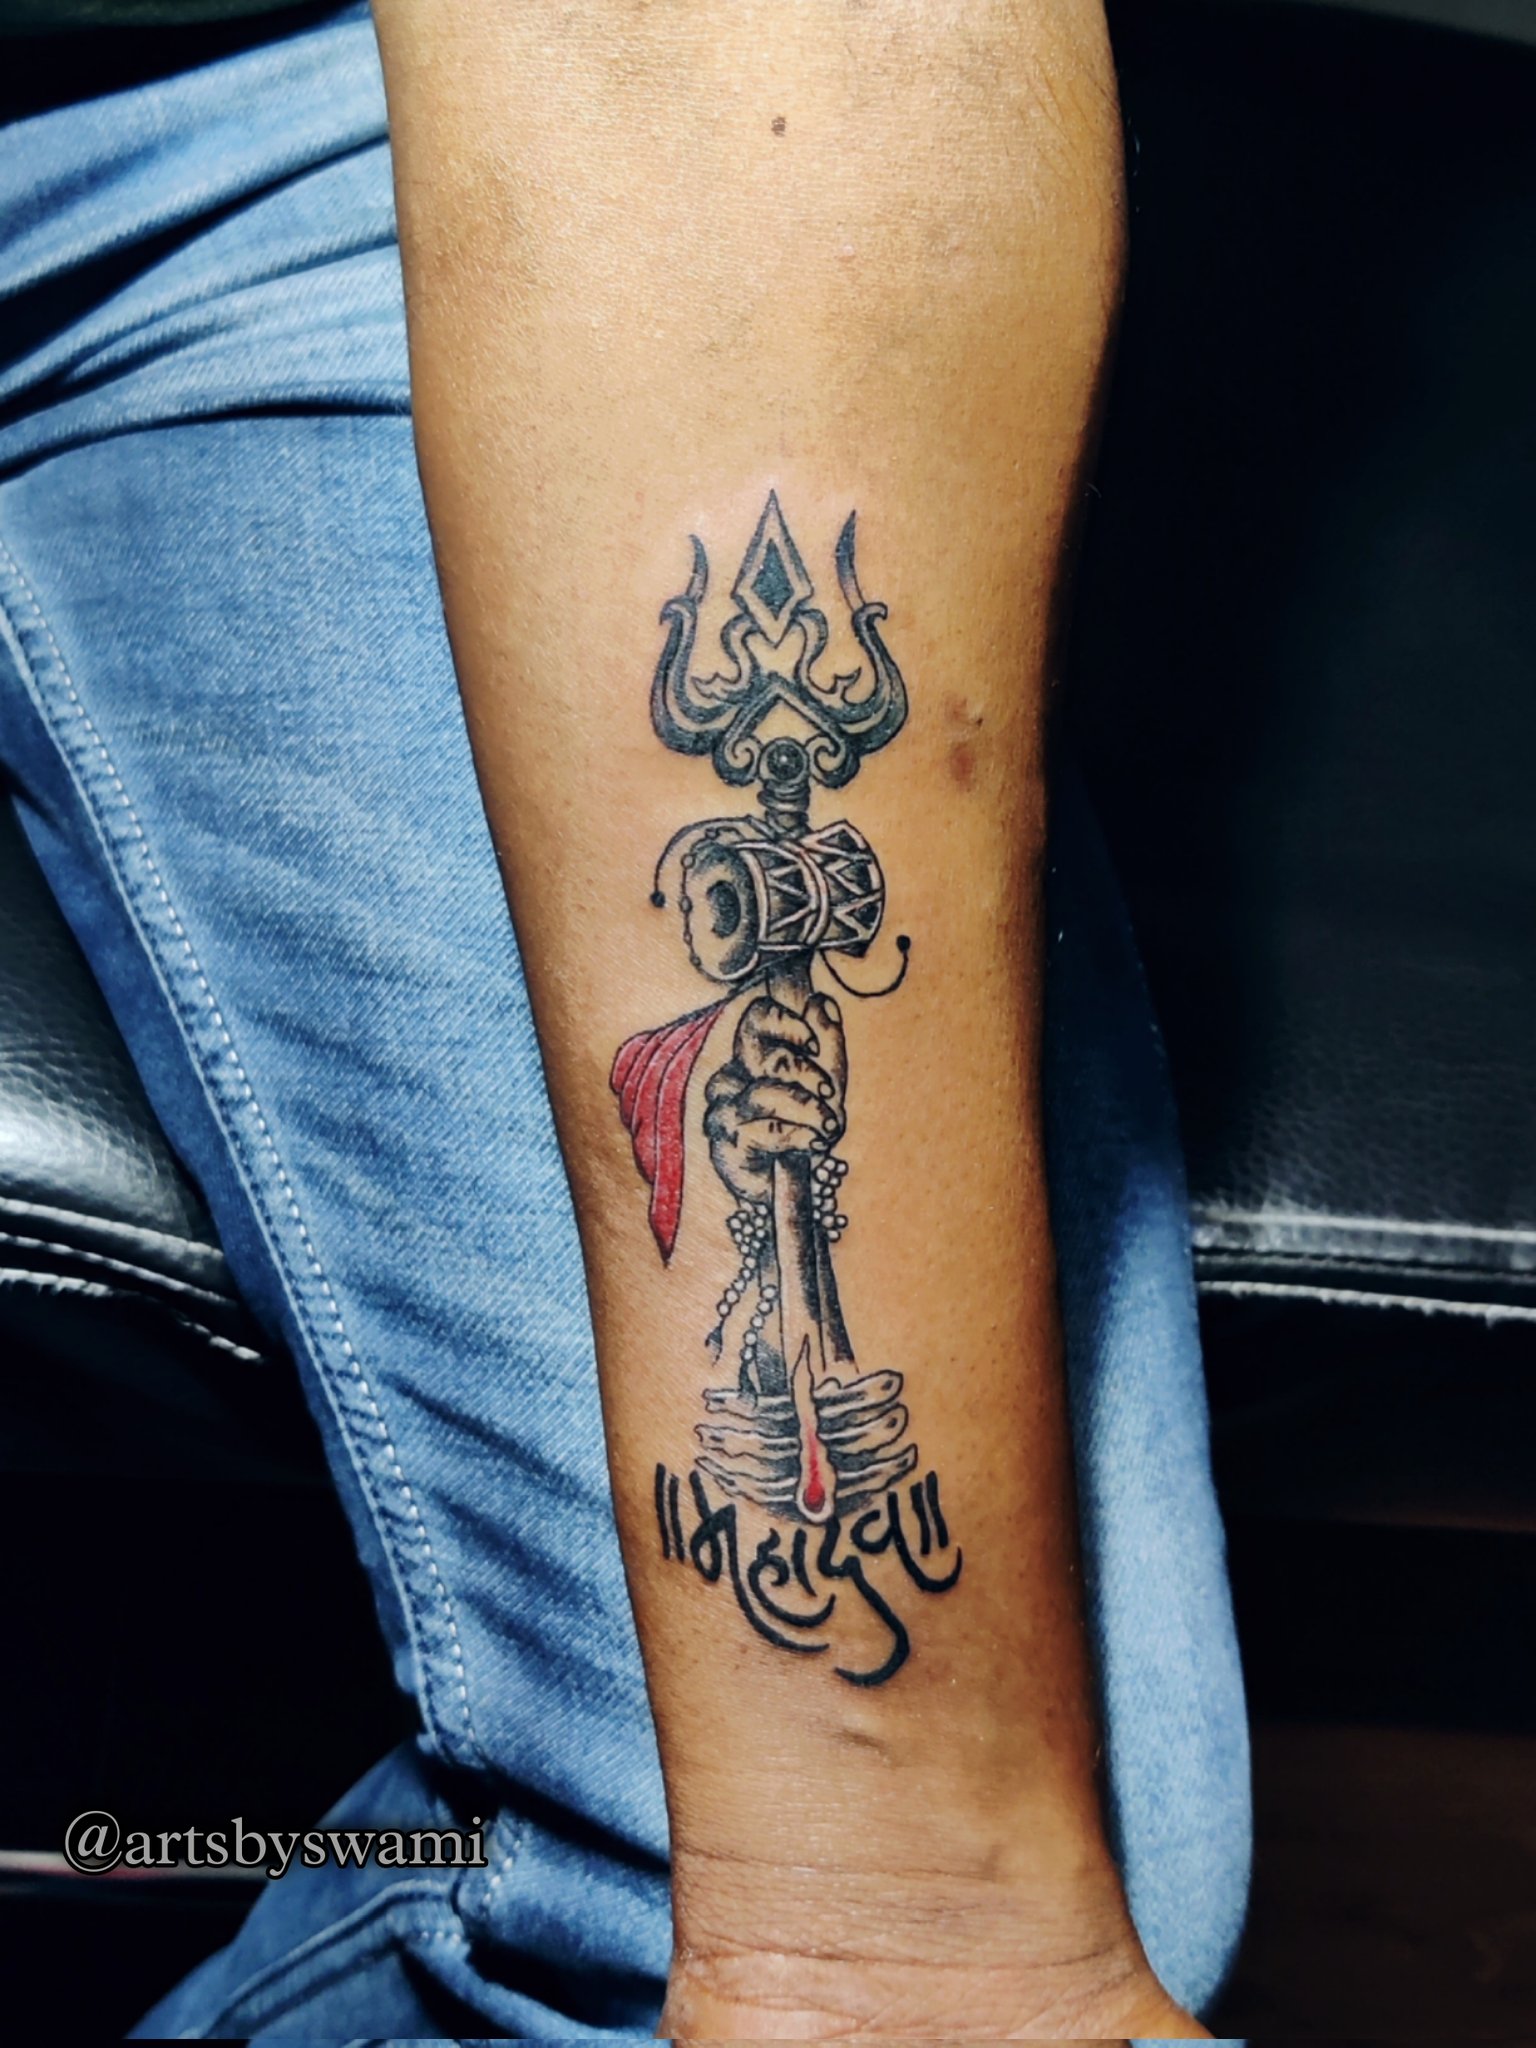 Abhishek Jaiswar on Twitter Lord Shiva tattoo by globaltattooindia  tattoo trishultattoo mahadevtattoo shivatattoo trishul shankartattoo  abhishekjaiswar tattooed omtattoo tattoodesign bodyart  tattoostudiointhane globaltattooindia 